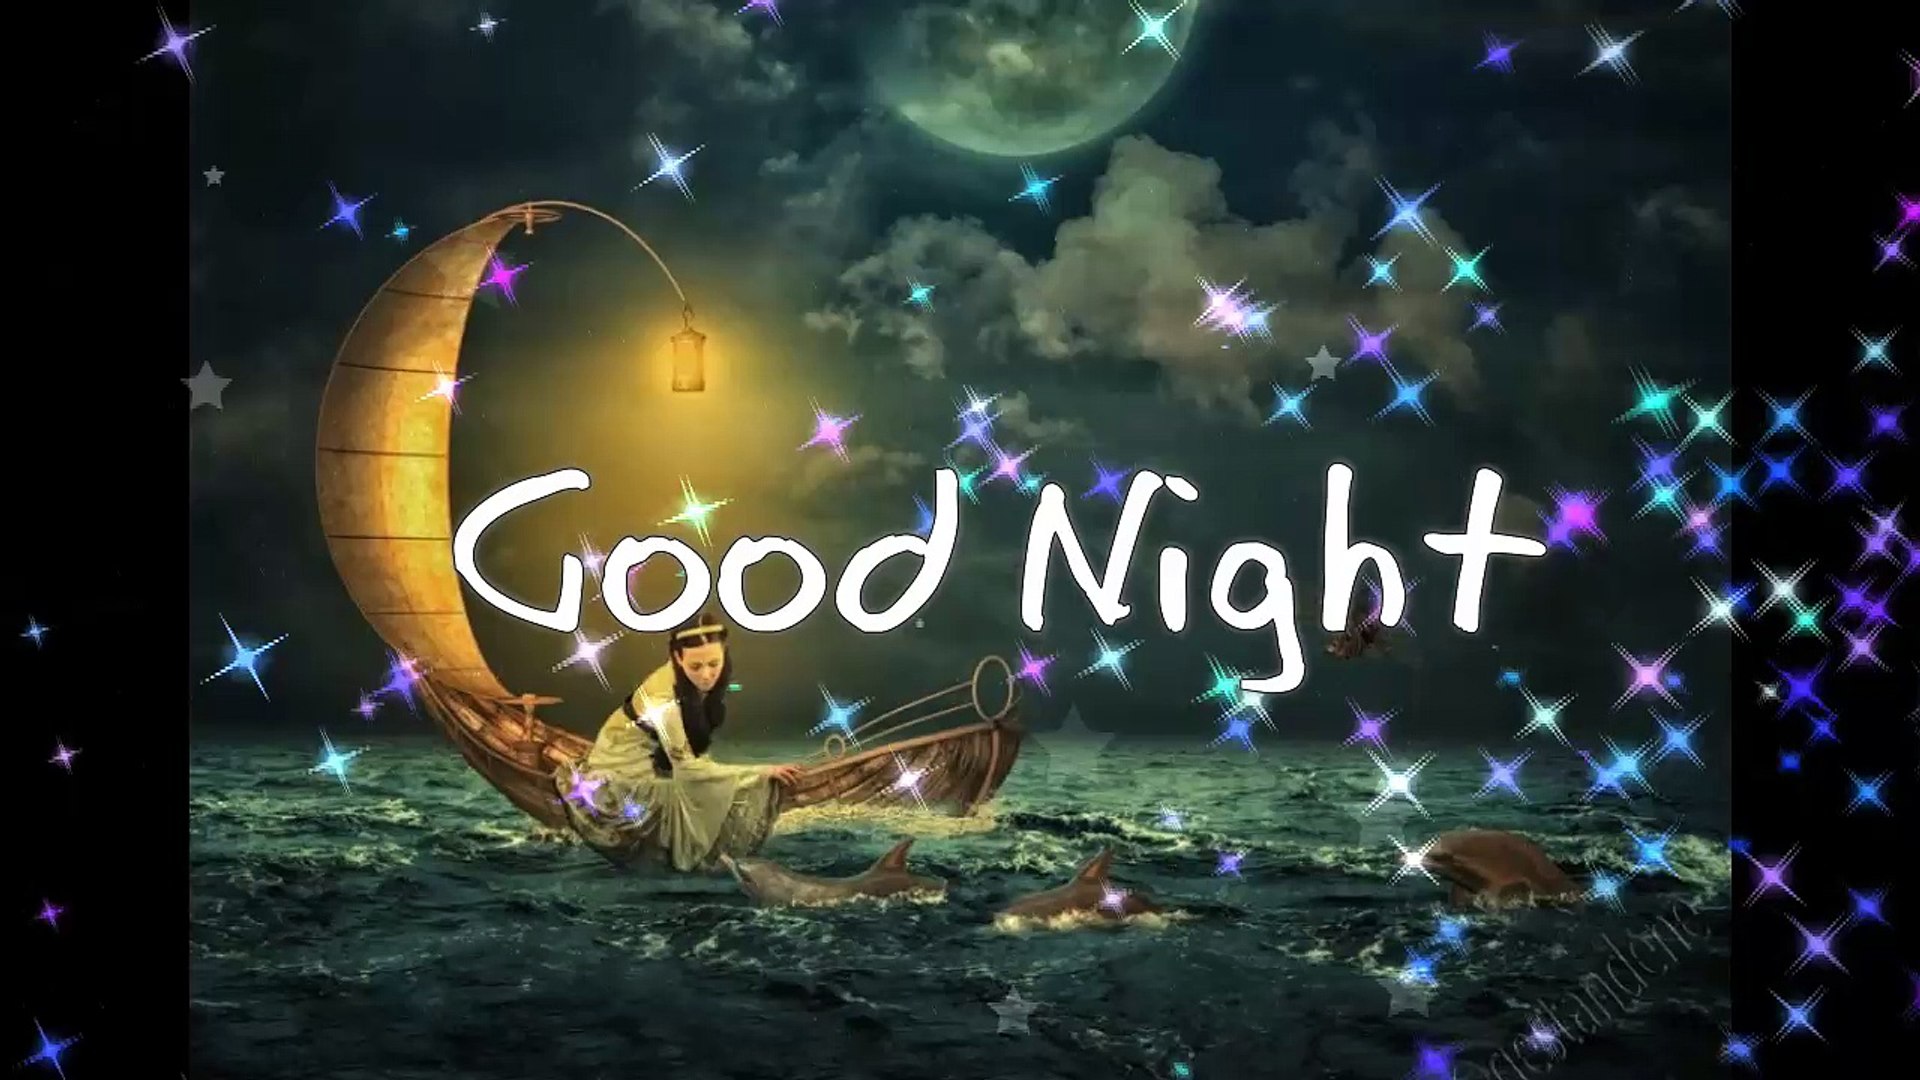 Good night sweet dreams wishesgood night greetingse